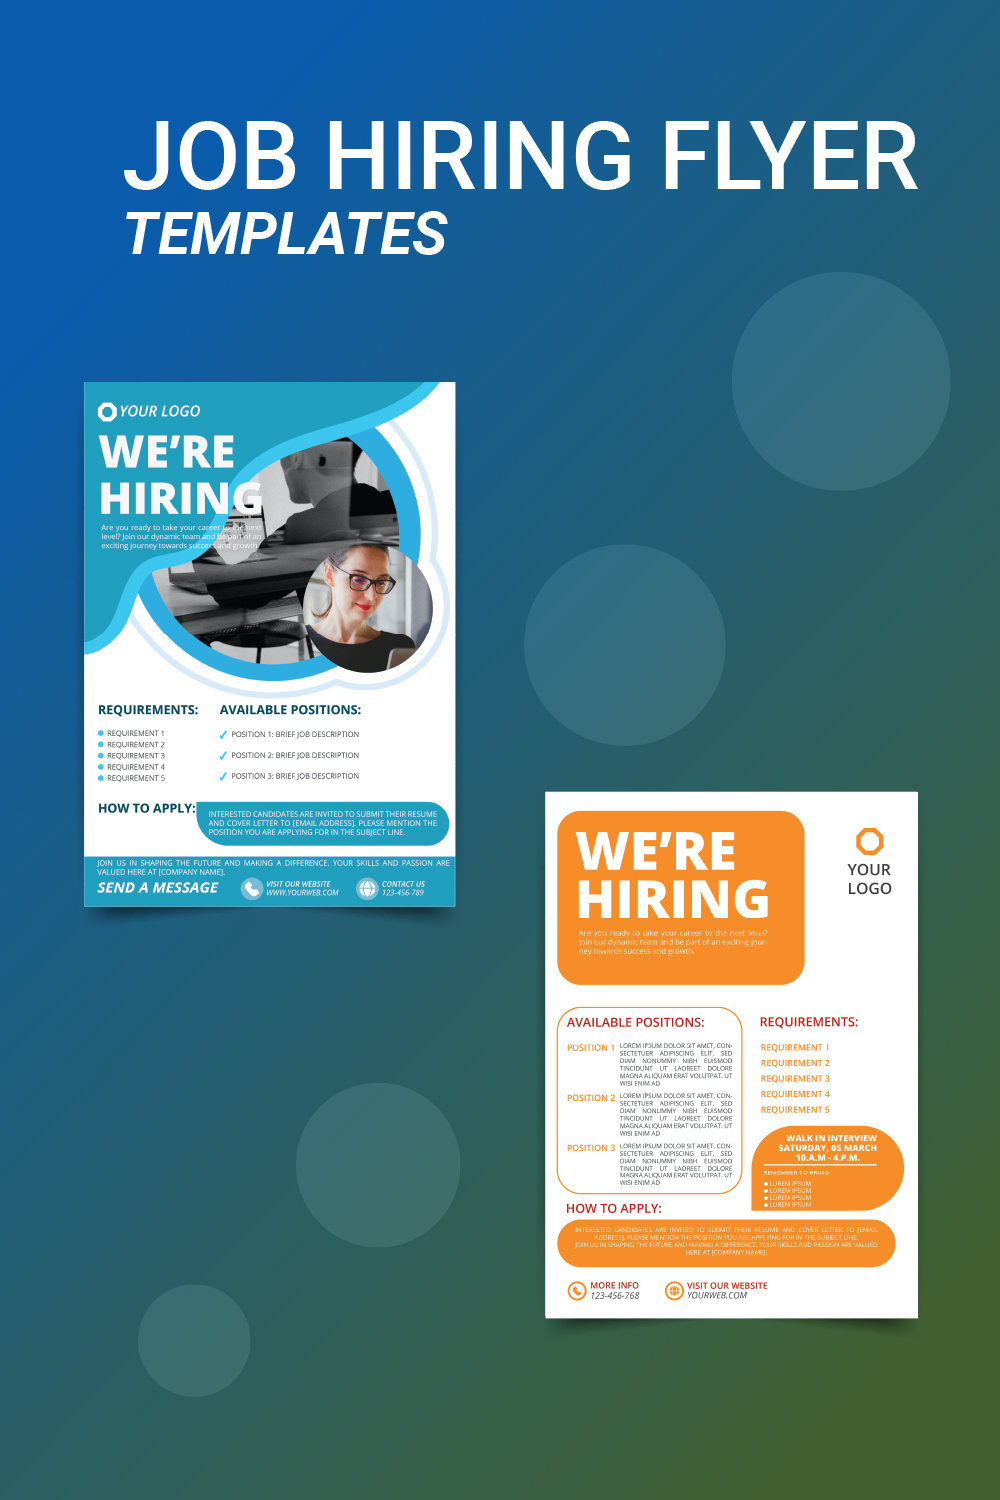 Job hiring flyer templates pinterest preview image.